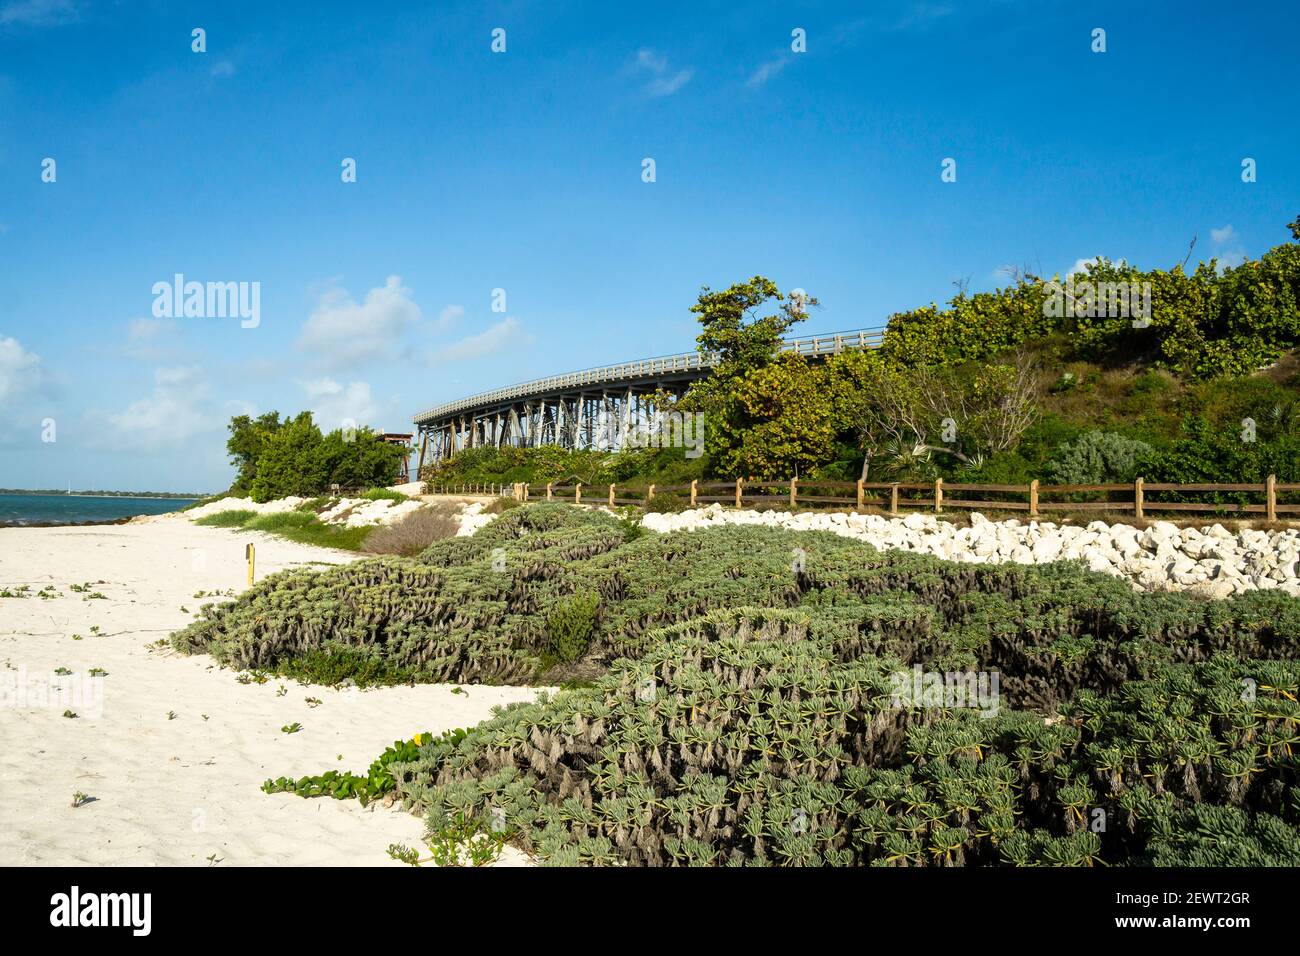 Bahia Honda State Park in the Florida Keys. March 2021 Stock Photo